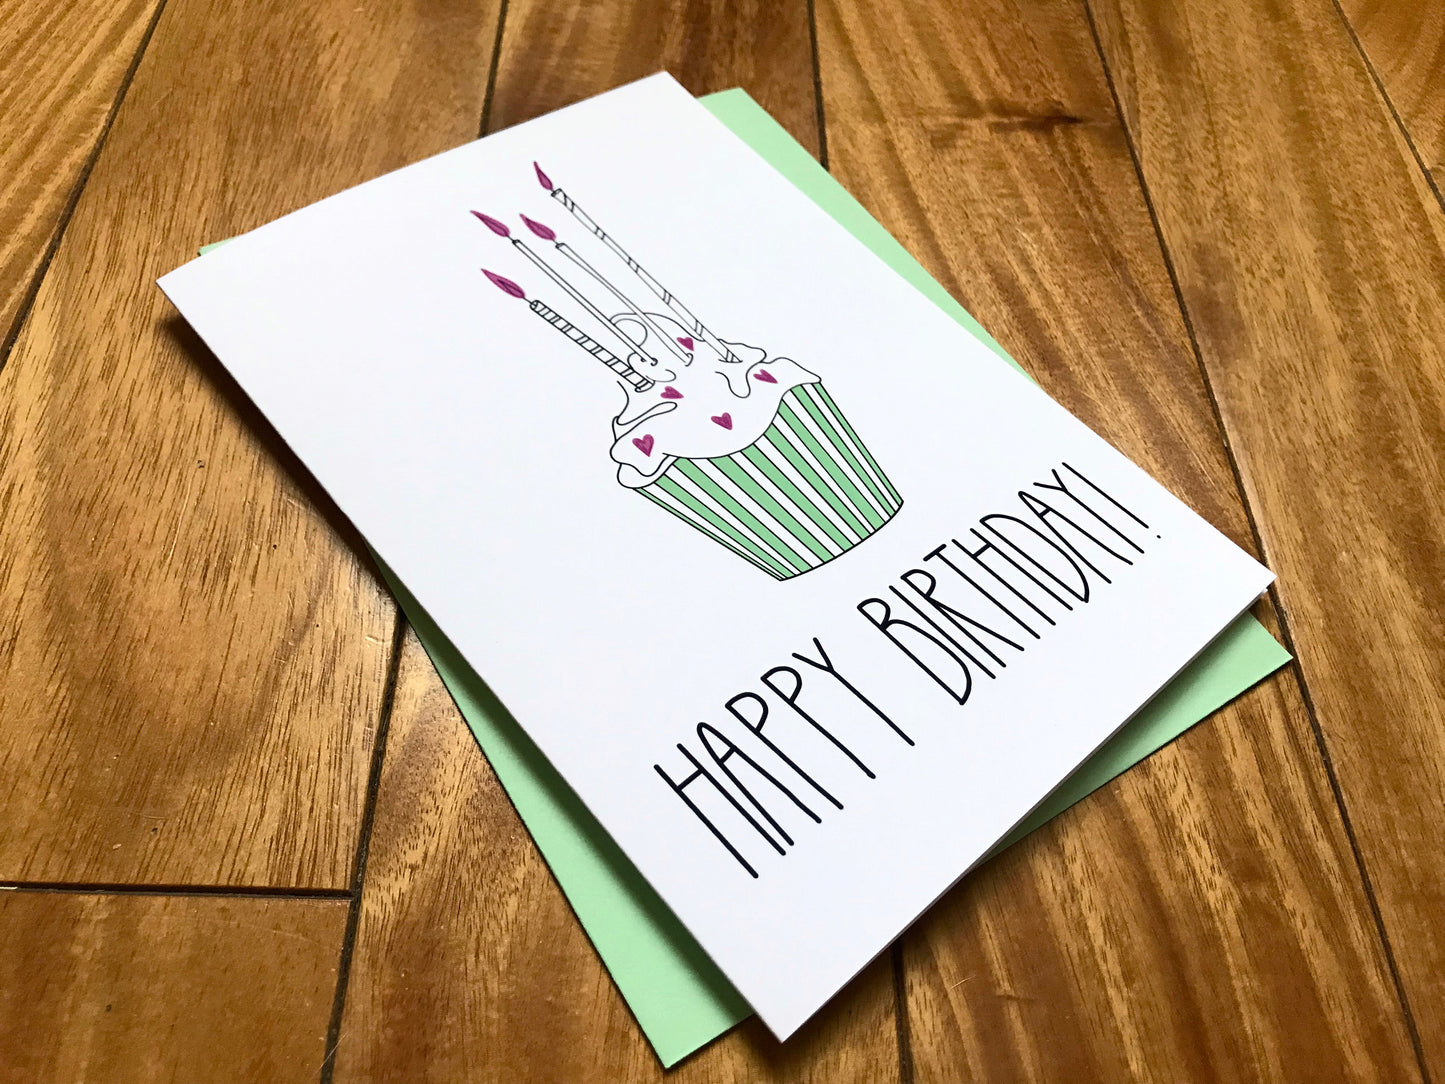 Happy Birthday Cupcake by StoneDonut Design